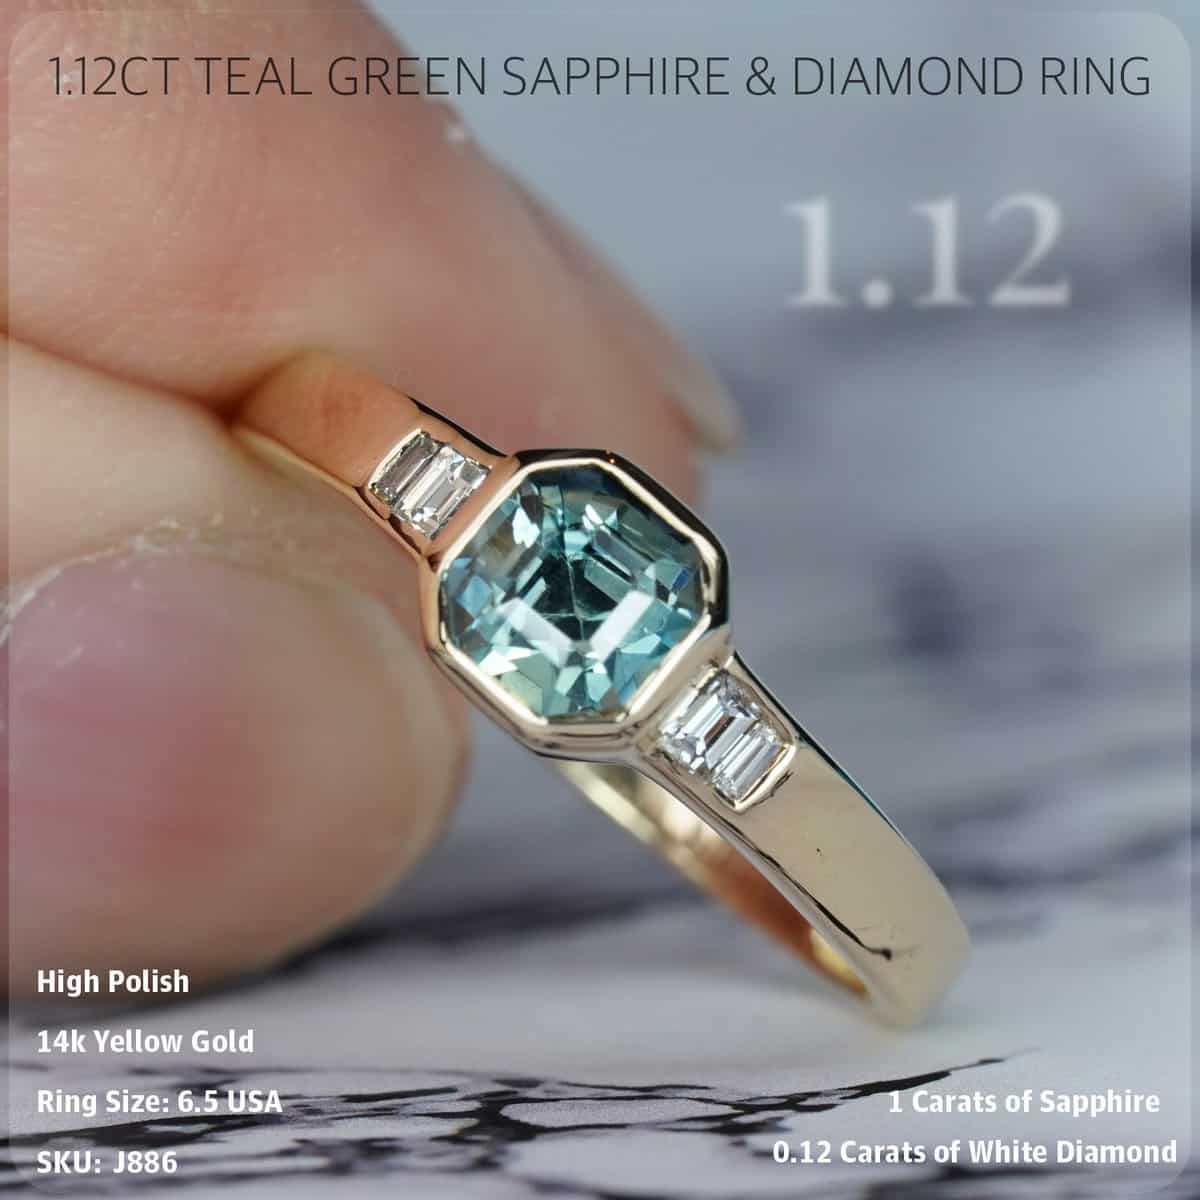 1.12CT Teal Green Sapphire & Diamond Ring